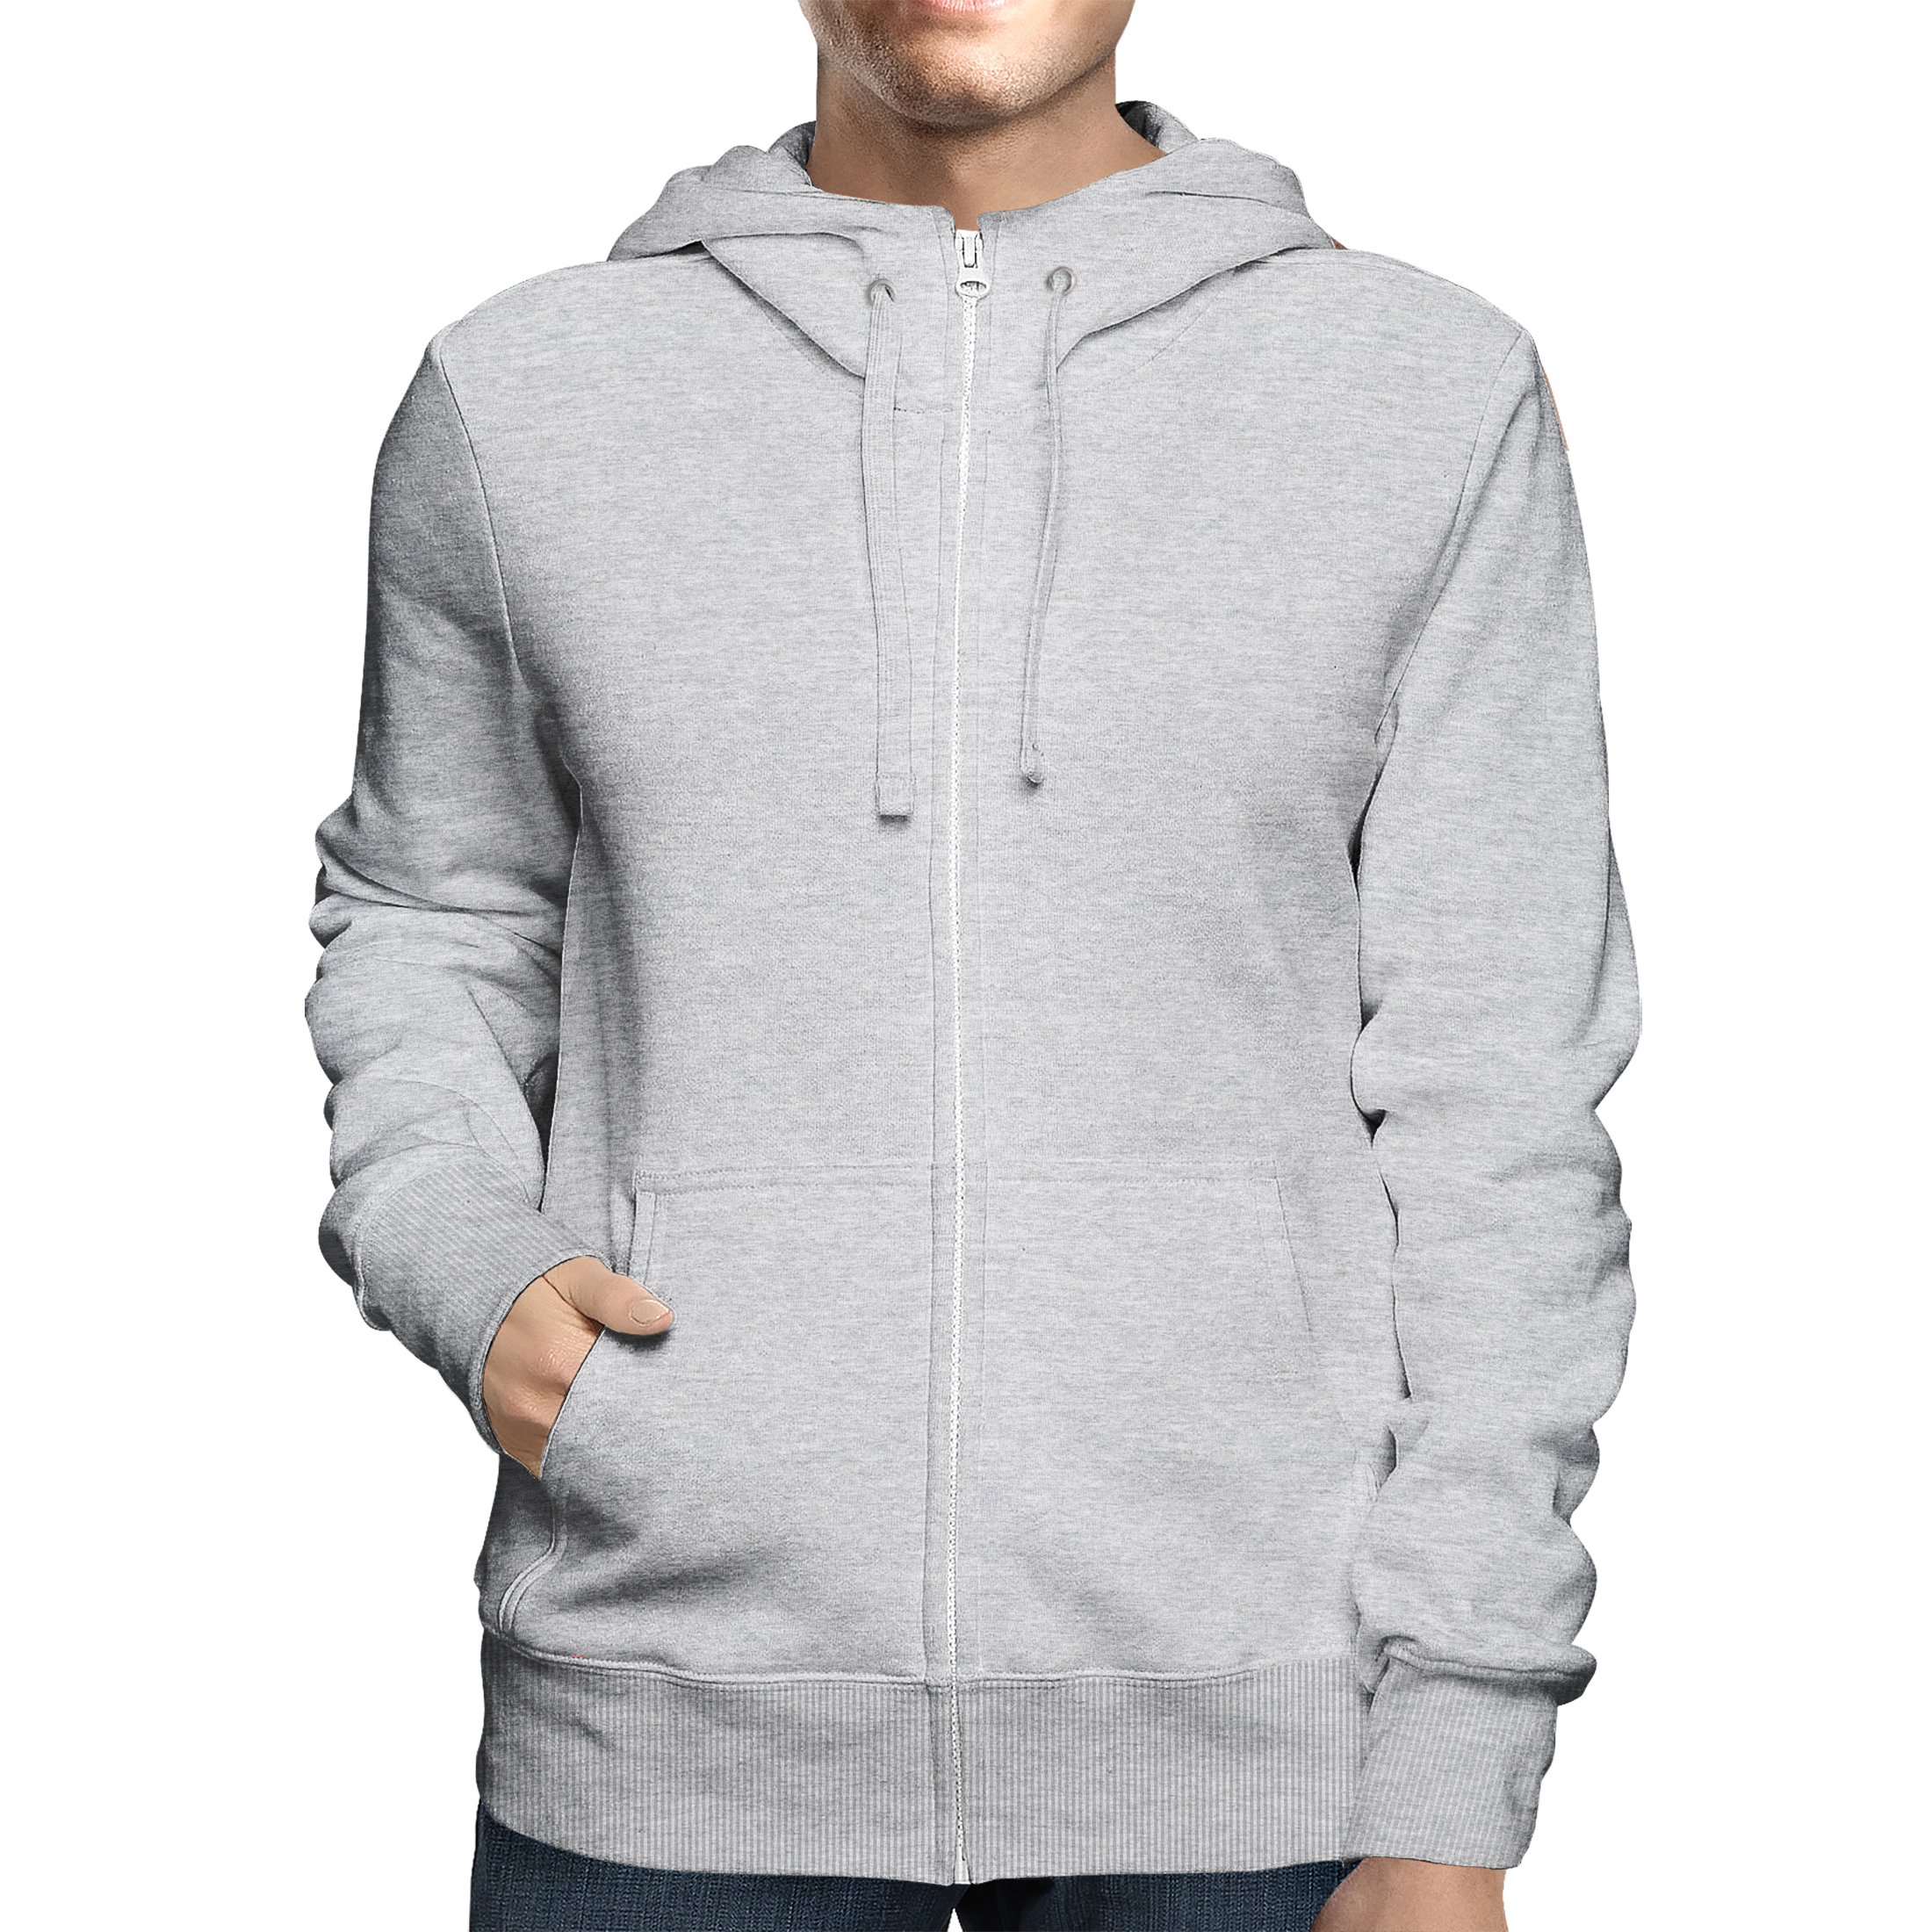 2-Pack: Men's Full Zip Up Fleece-Lined Hoodie Sweatshirt (Big & Tall Size Available) - Gray, Medium